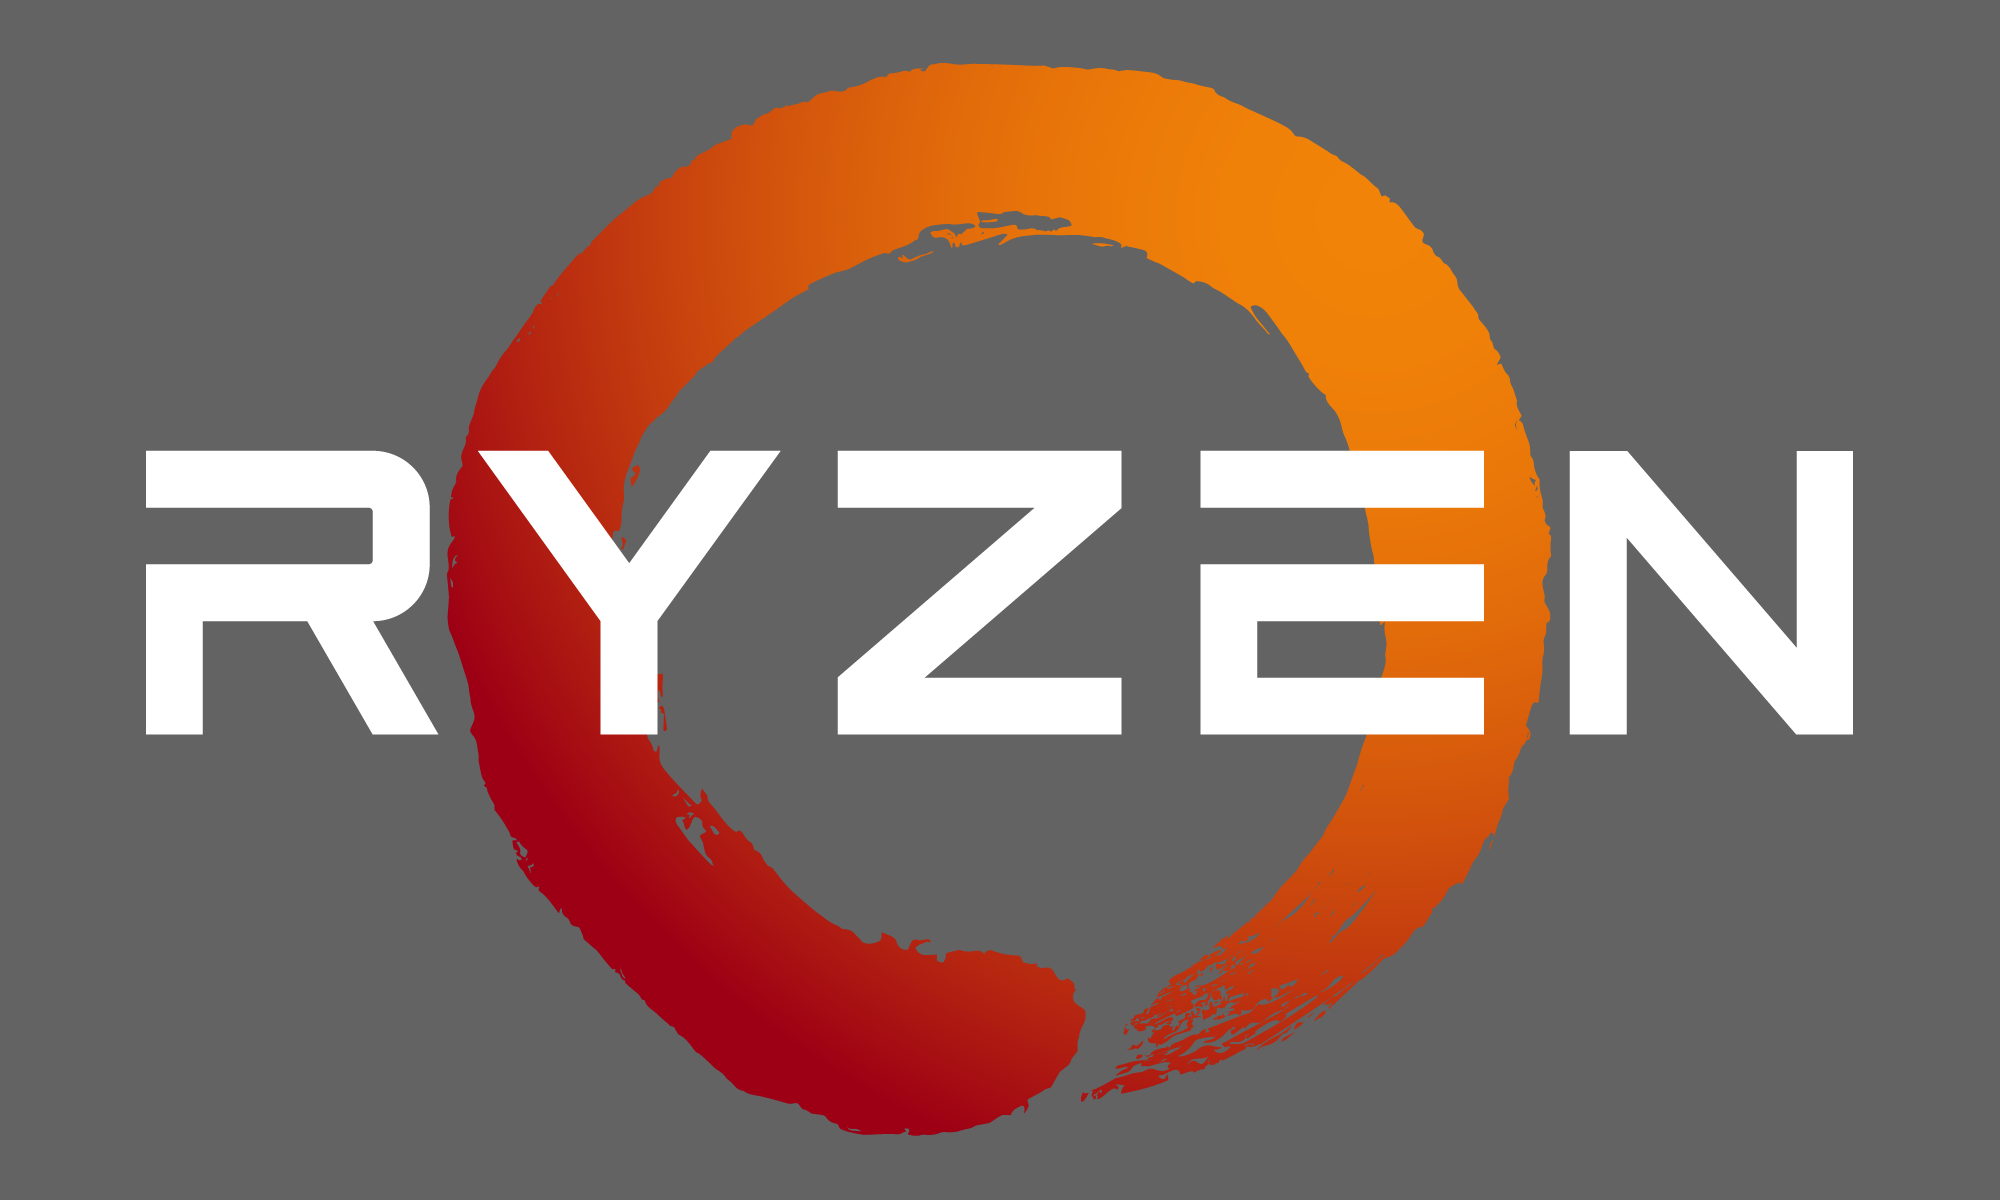 Amd Ryzen Logo.